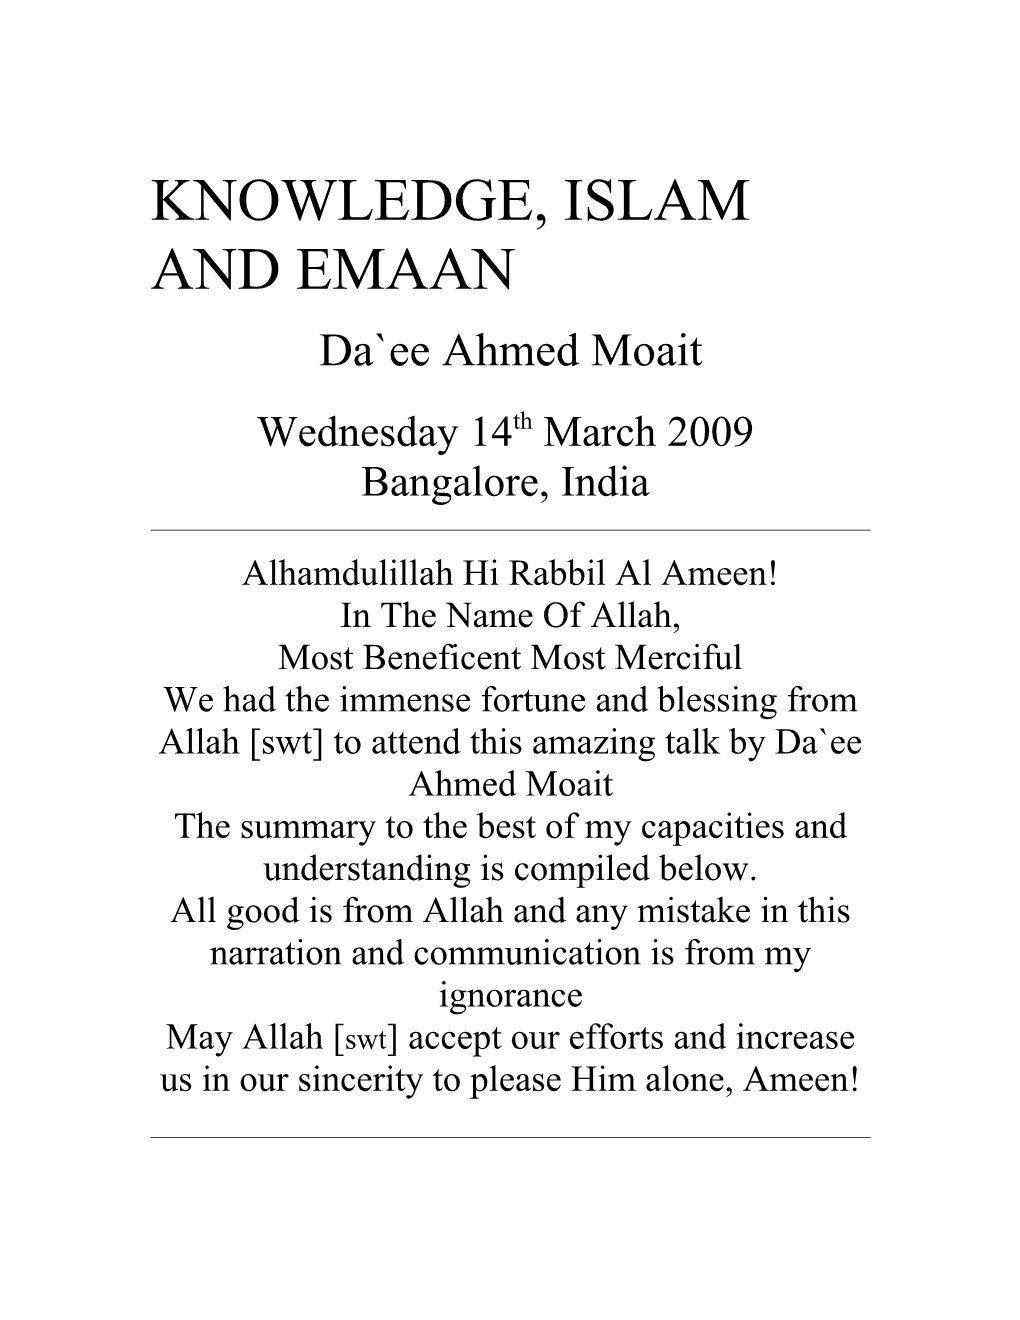 Knowledge, Islam and Imaan